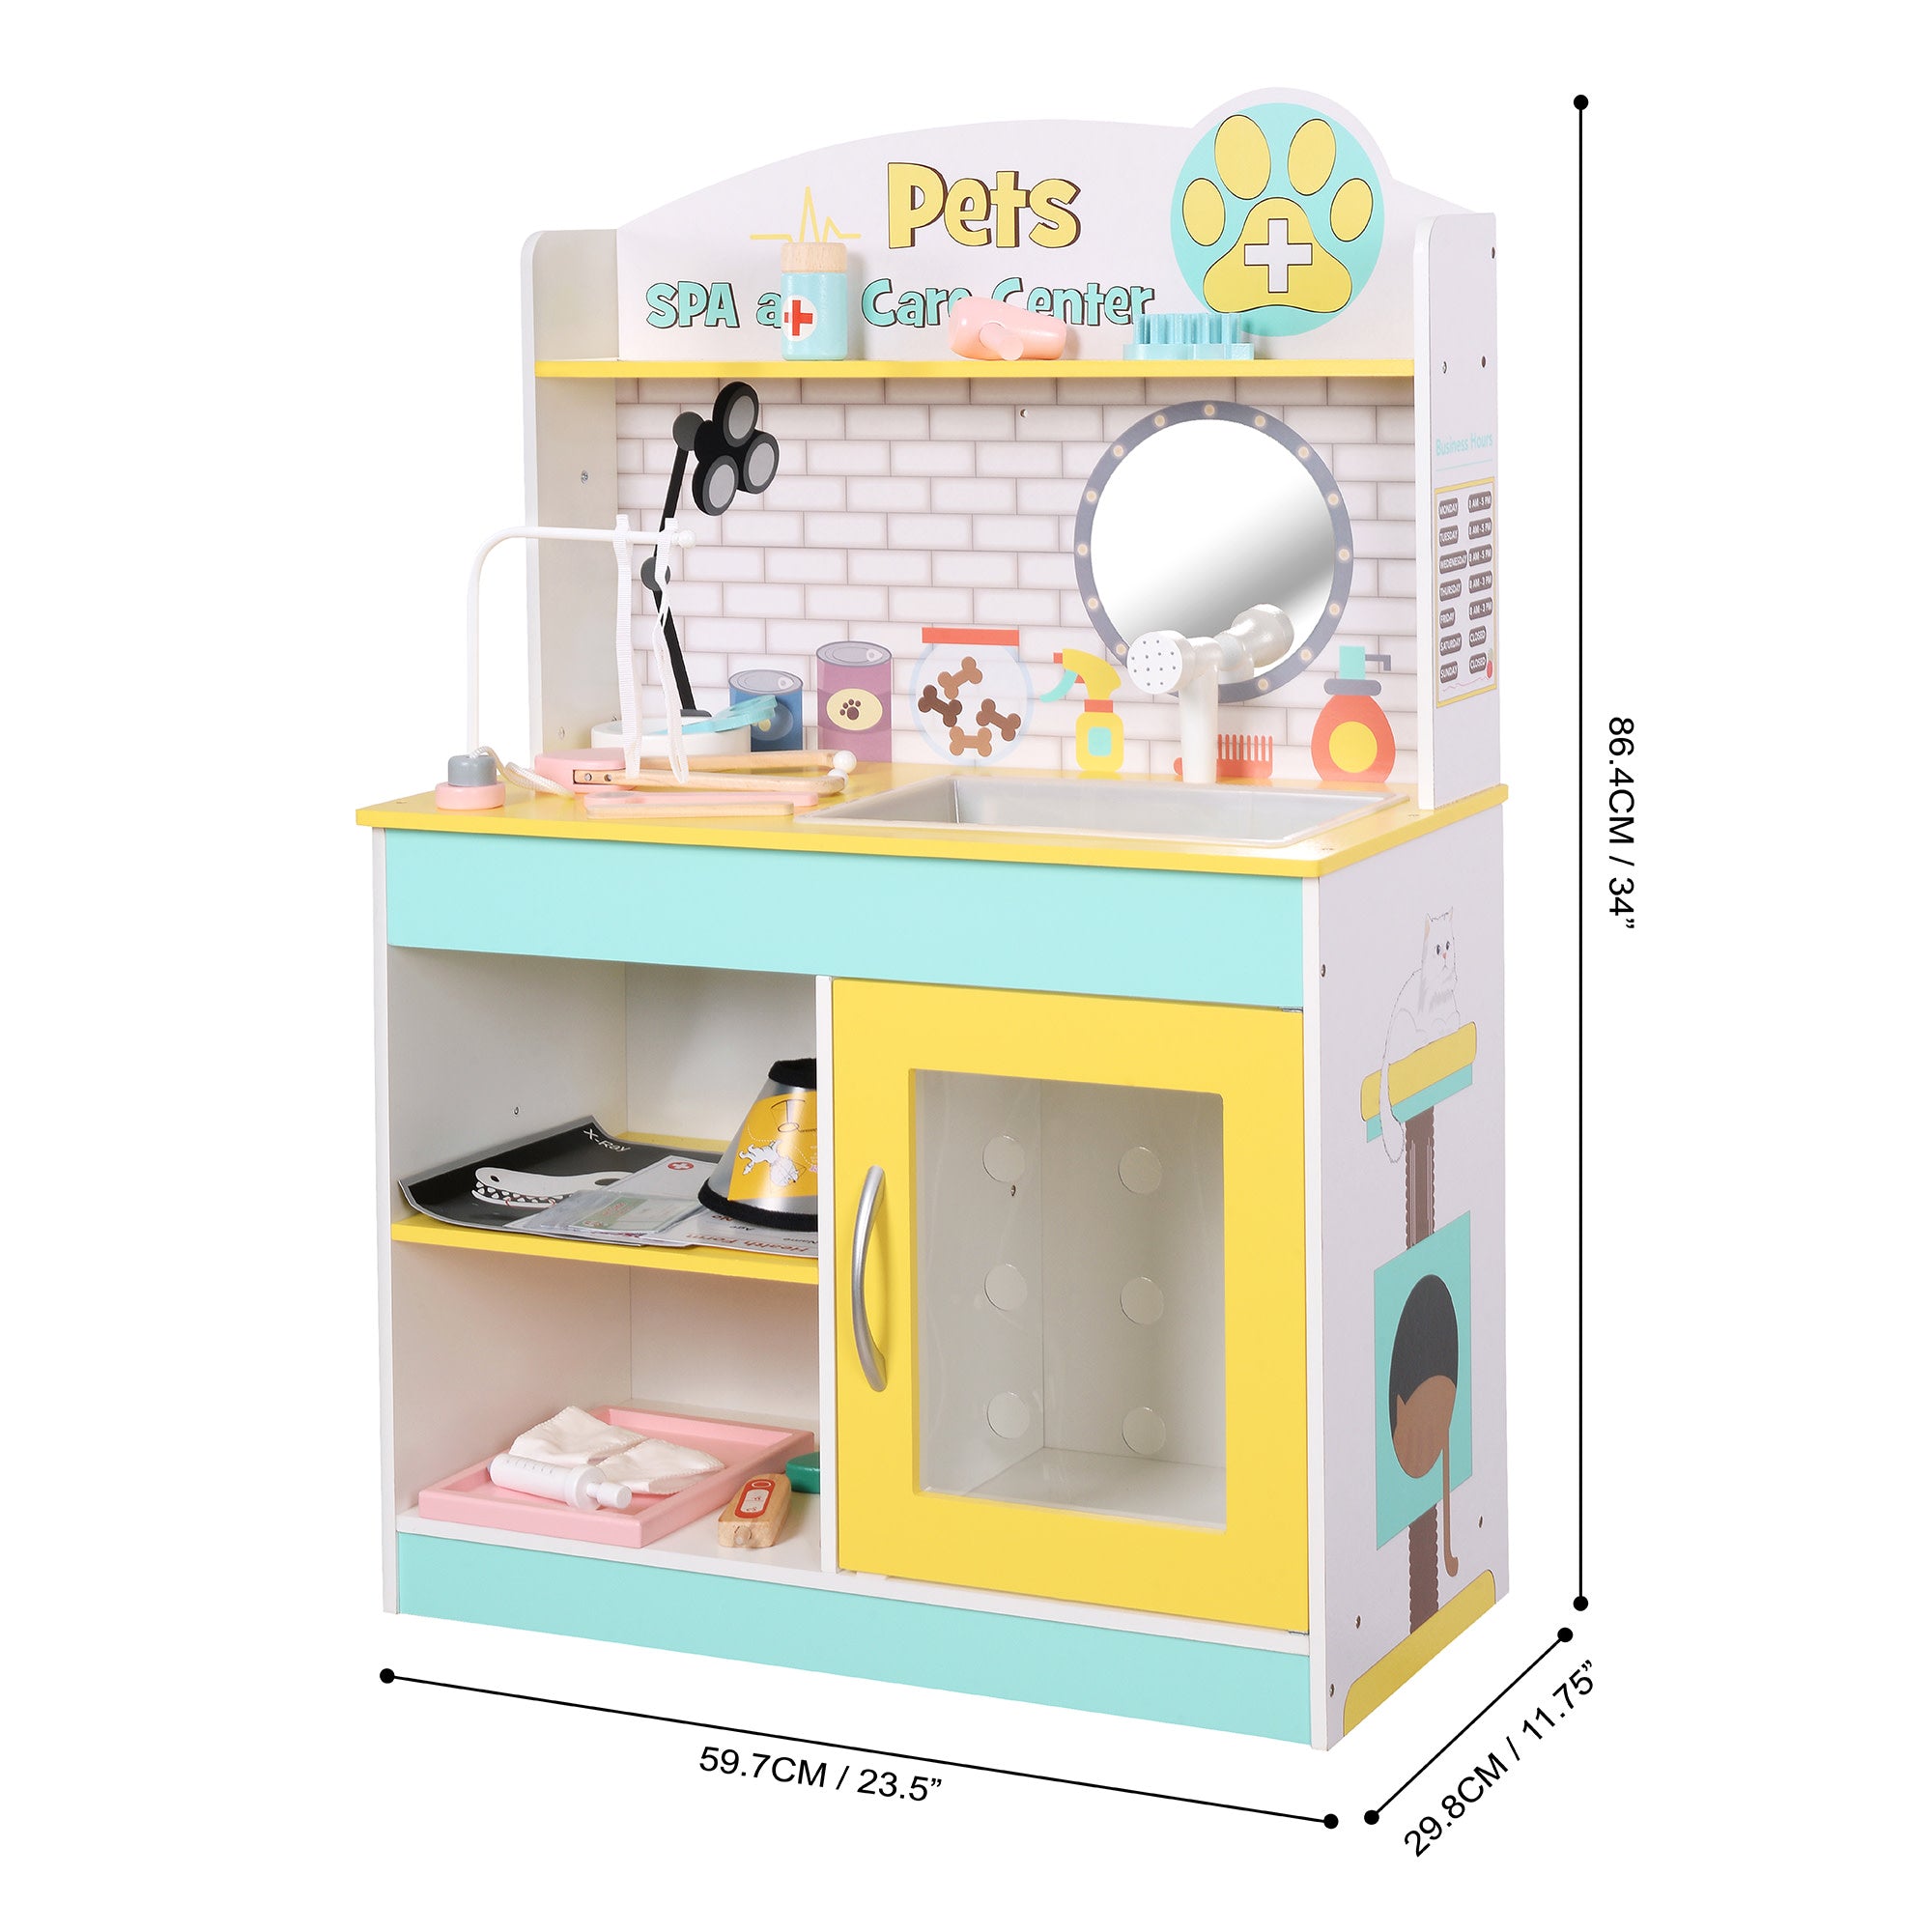 Teamson Kids - Little Helper Pet Play Stand Toys - Green/Yellow